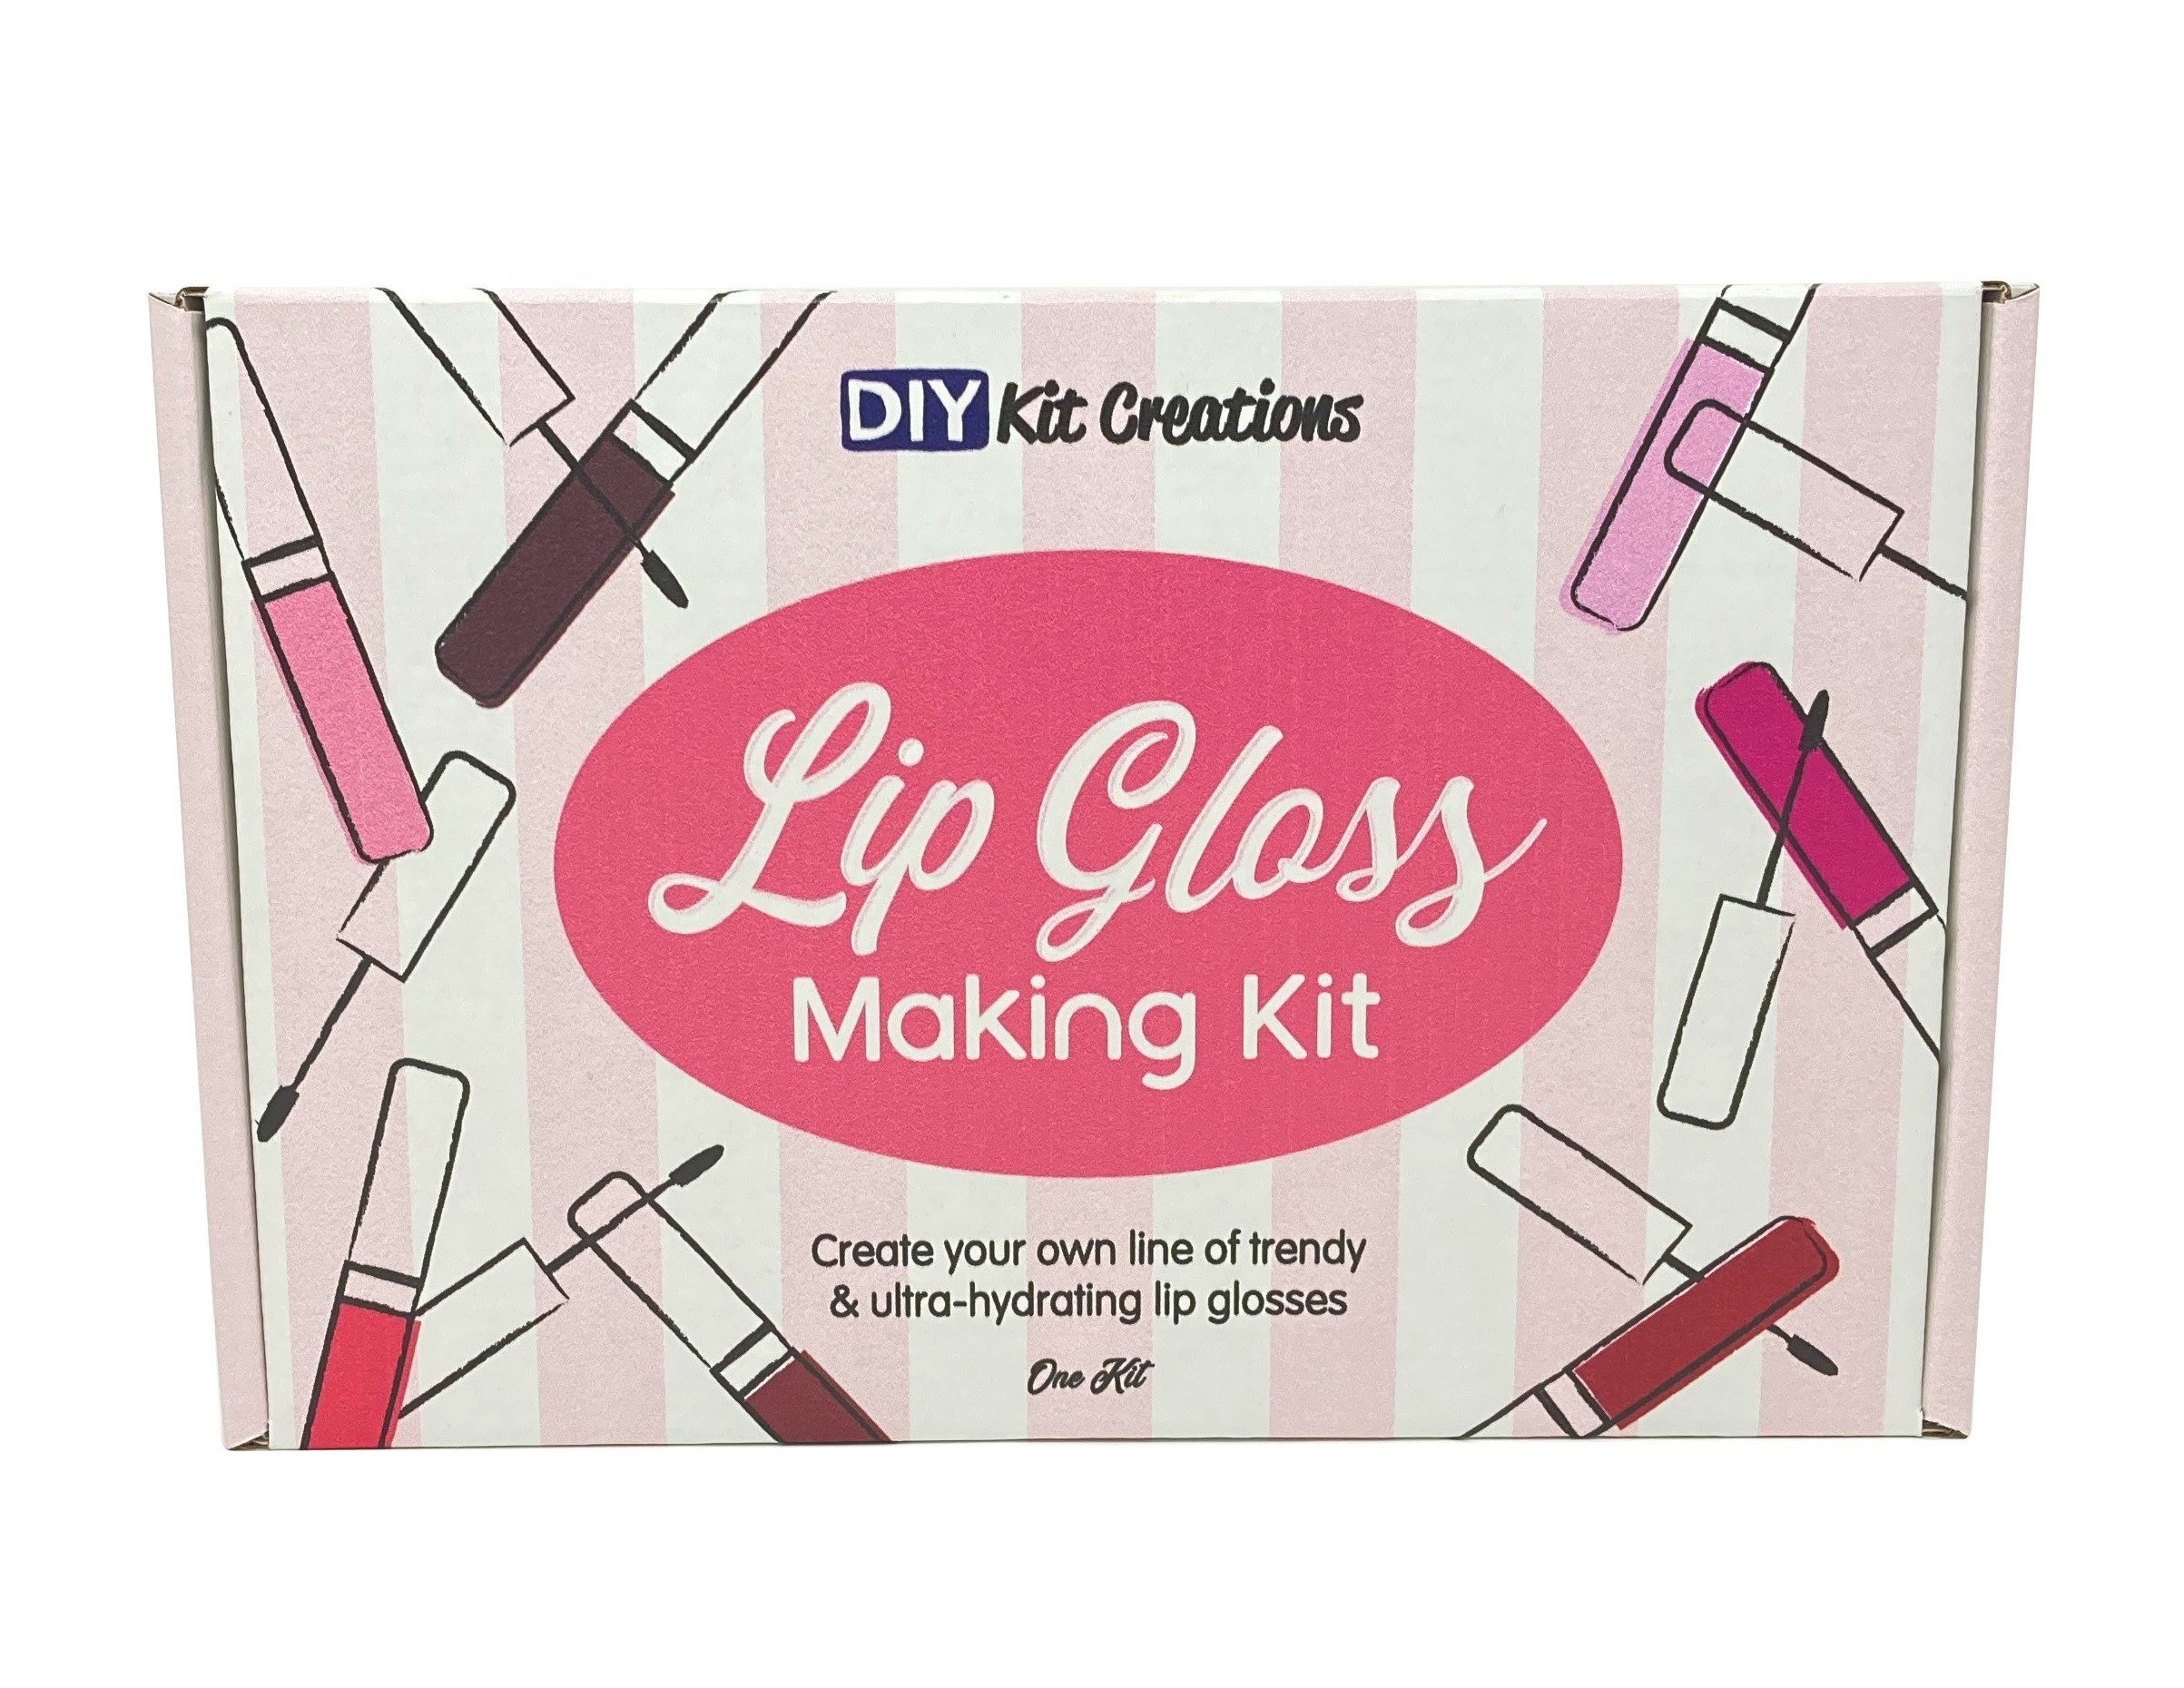 DIY Kit Creations: Deluxe DIY Lip Gloss Making Kit - image 2 of 8